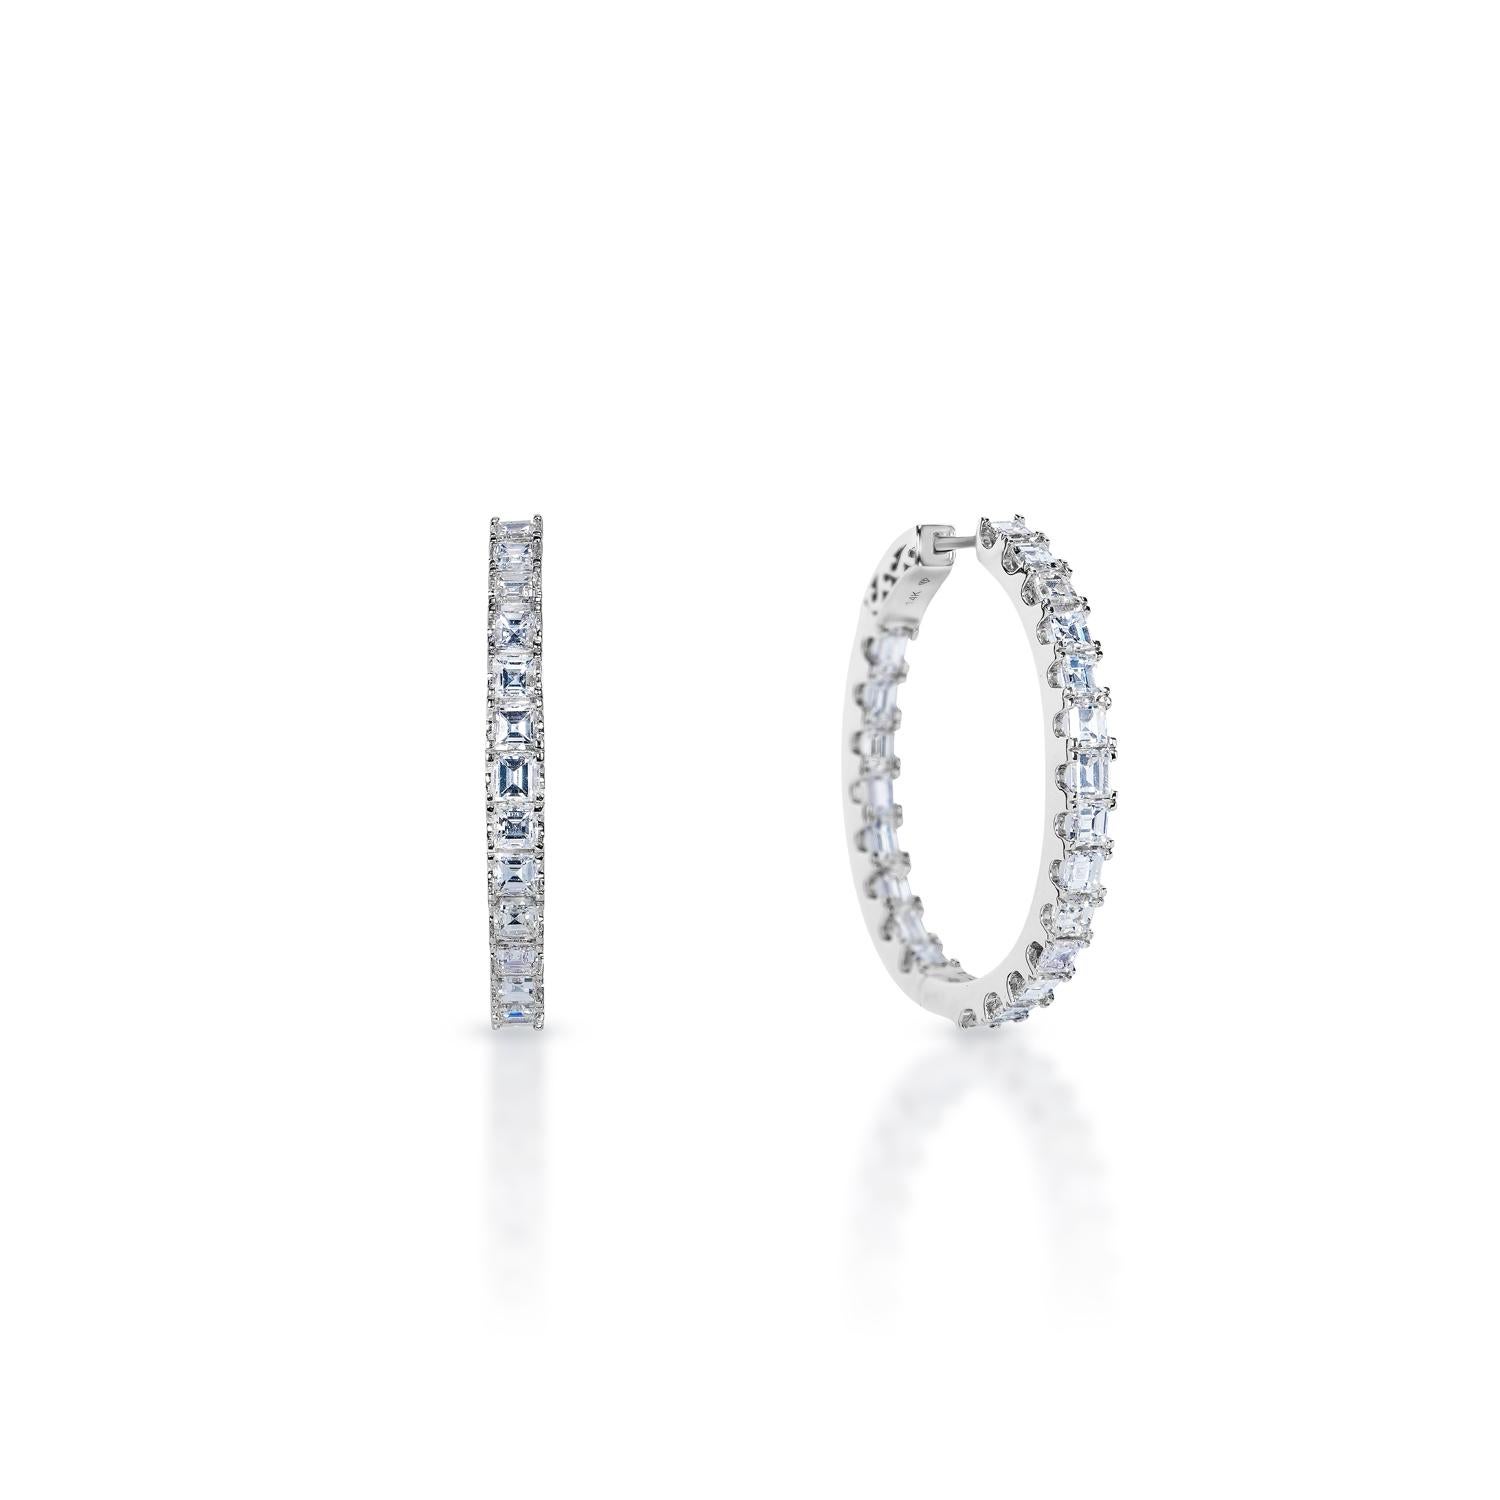 Diamond Hoop Earrings For Ladies:

Carat Weight: 5.14 Carats
Shape: Asscher Cut
Metal: 14KT White Gold 10.00 Grams
Style: Hoop Earrings